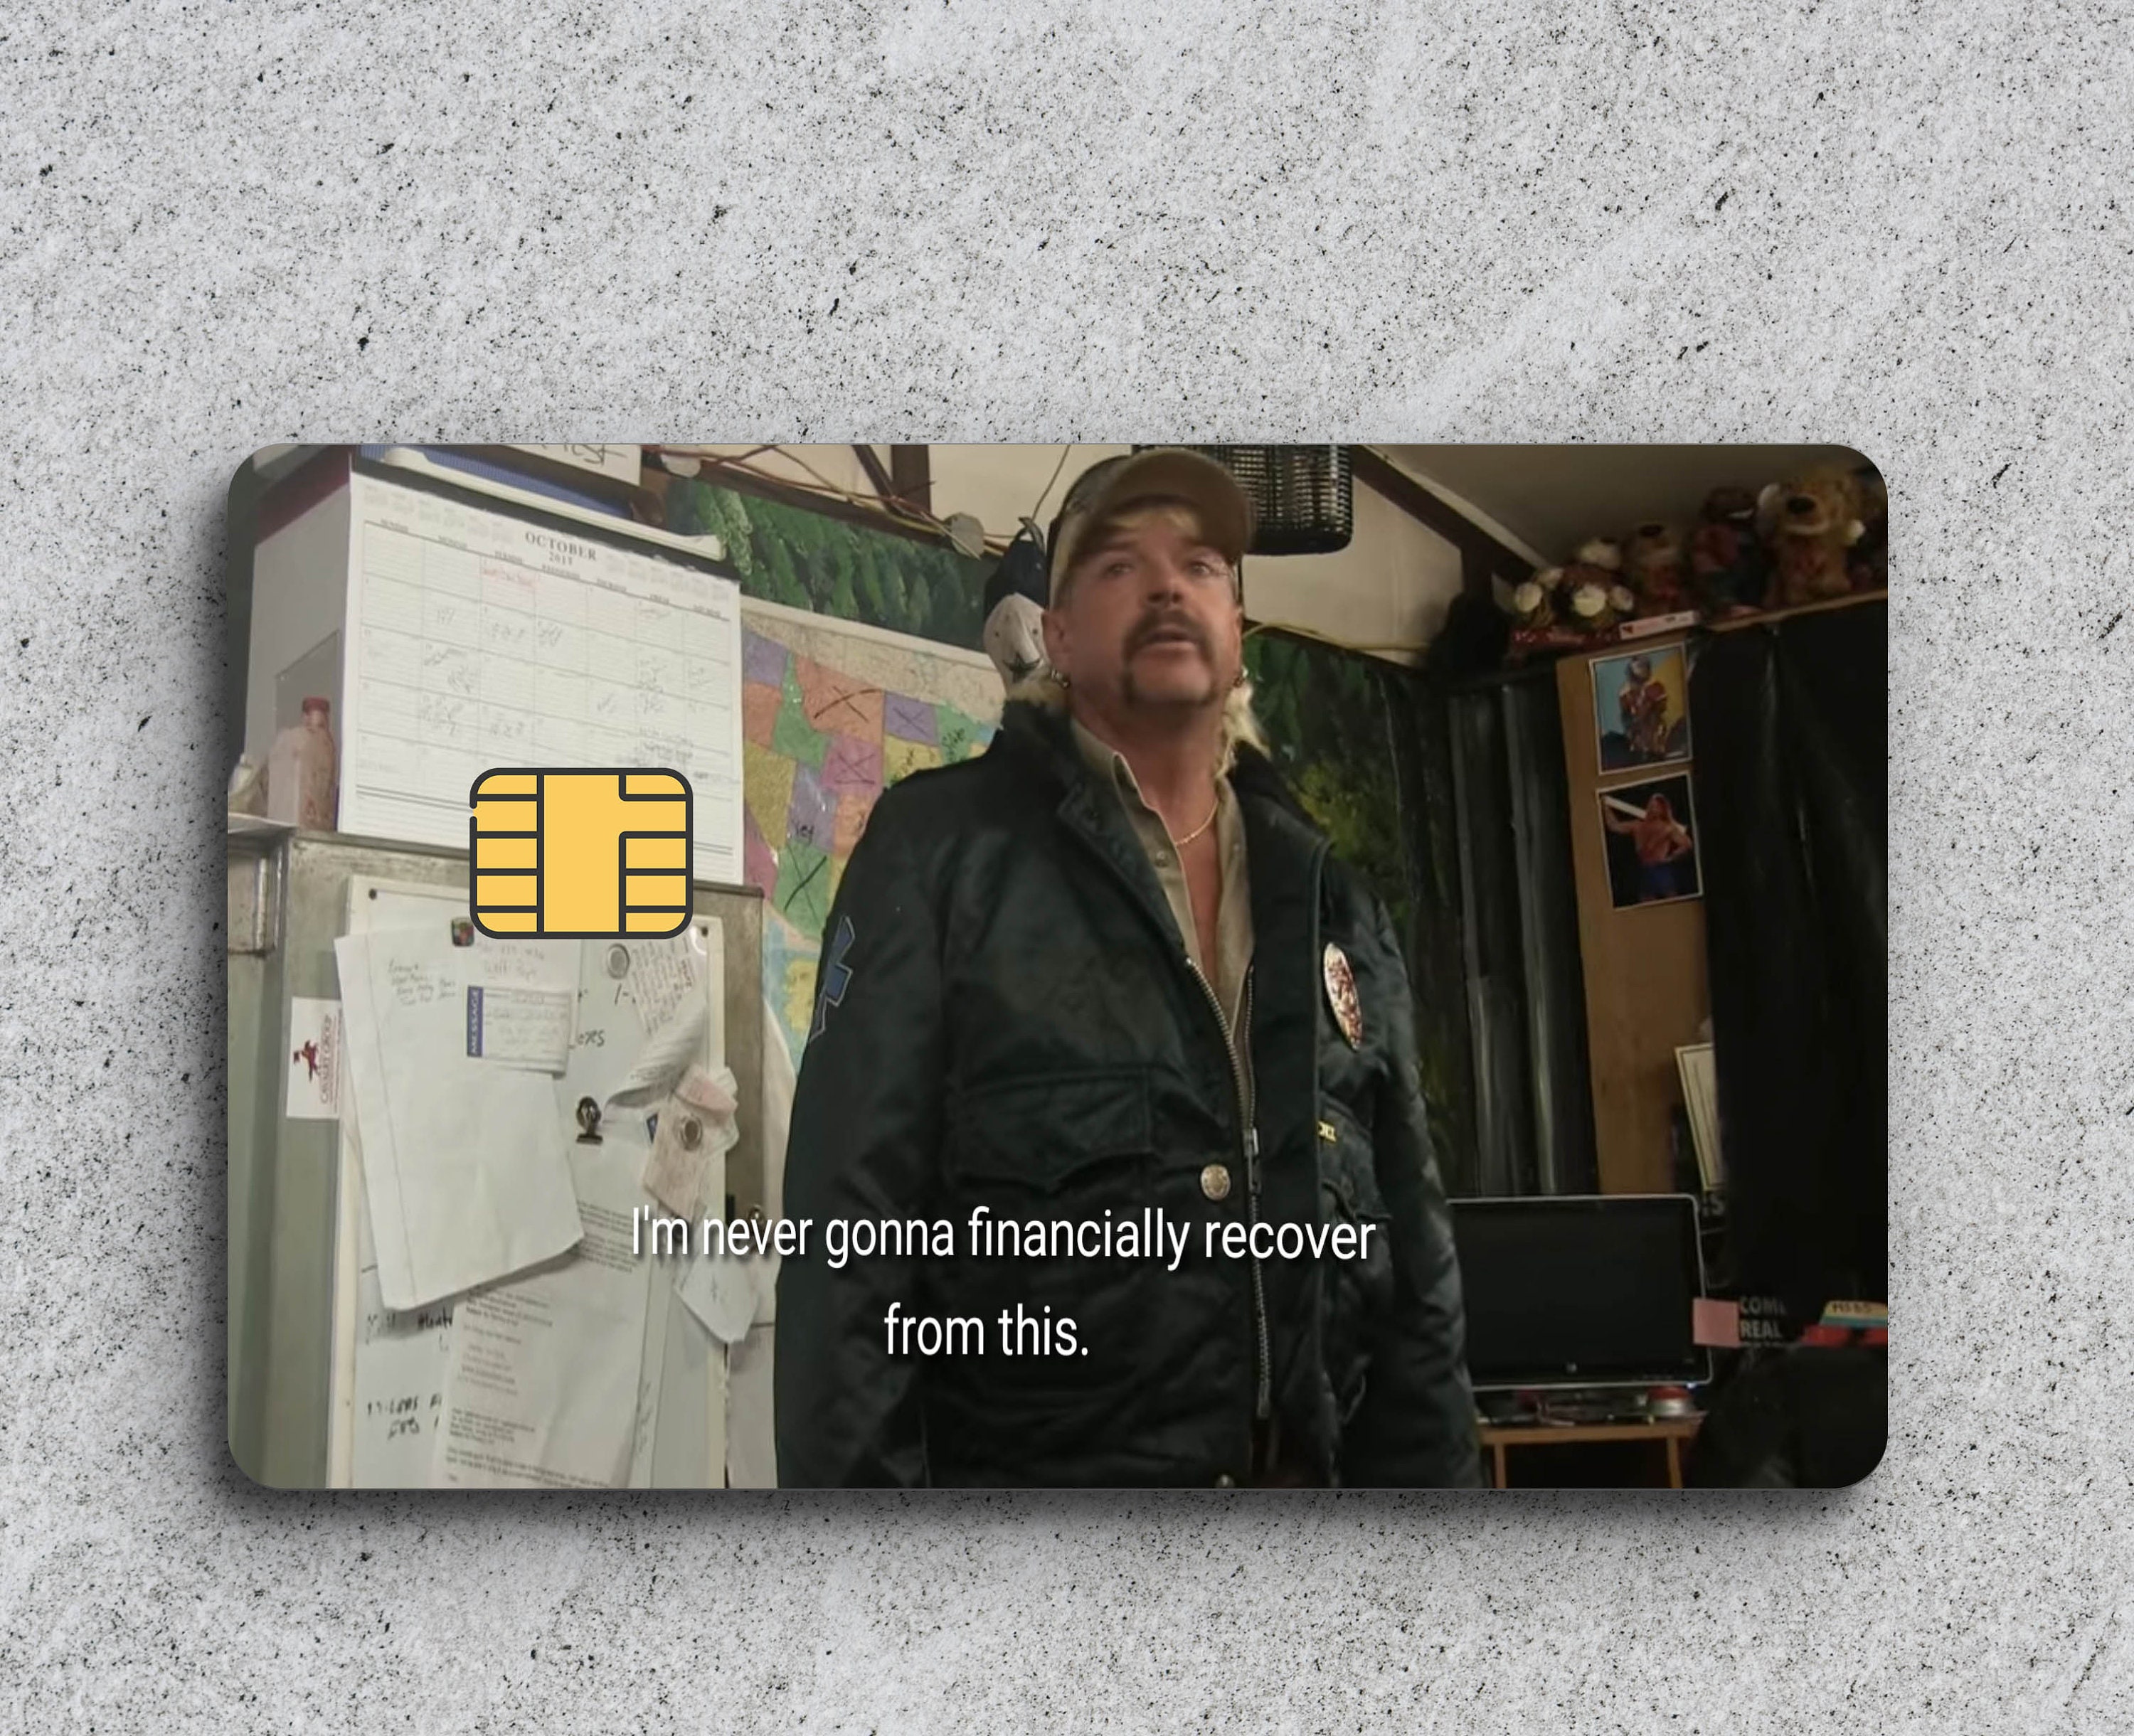 WORKIRAN Pat Starfish Card Skin | Key Card, Debit Card, Credit Card Sticker  | Covering & Personalizi…See more WORKIRAN Pat Starfish Card Skin | Key